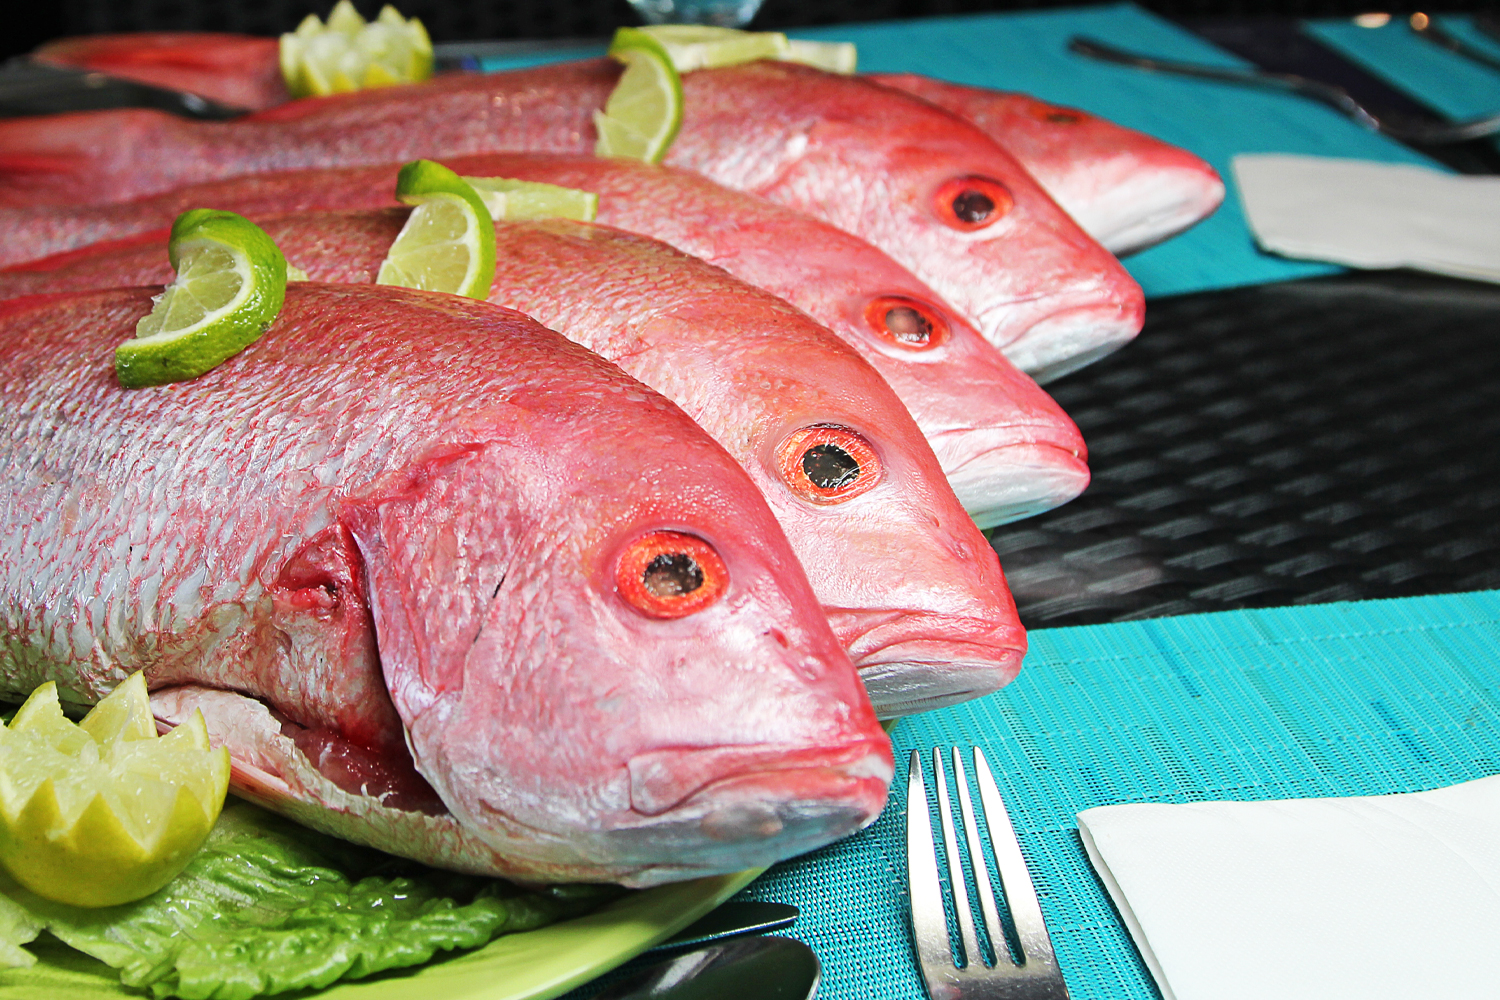 The Grand Fish Restaurant Aruba